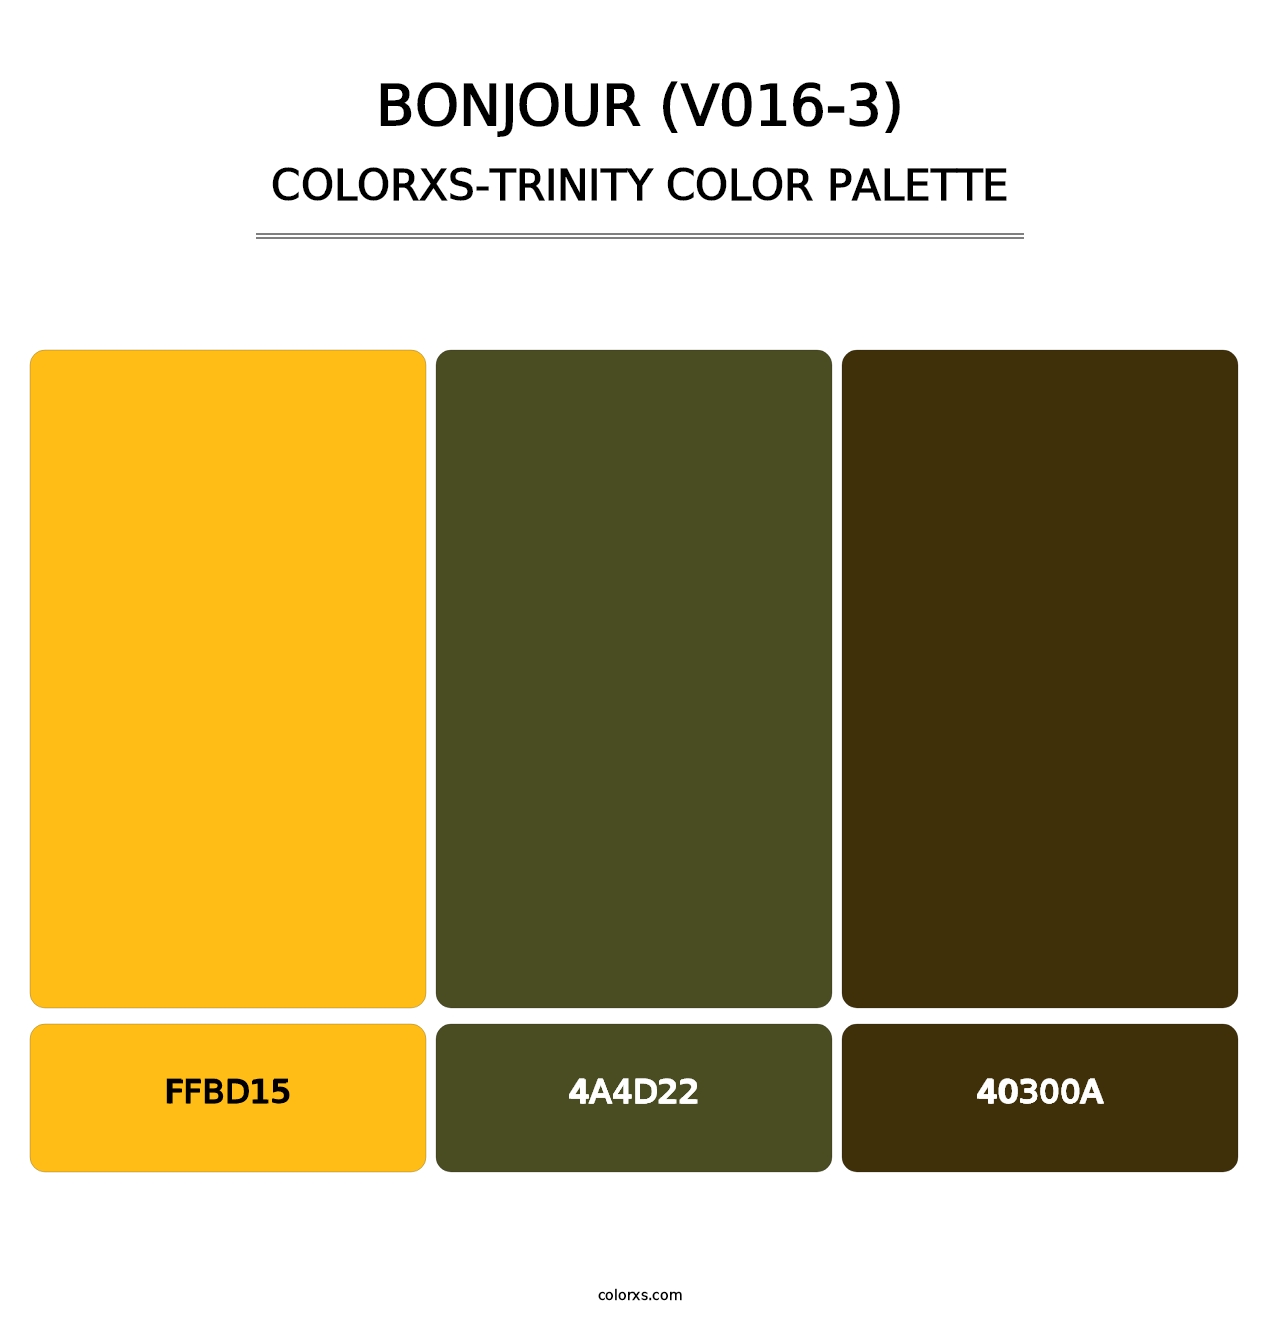 Bonjour (V016-3) - Colorxs Trinity Palette